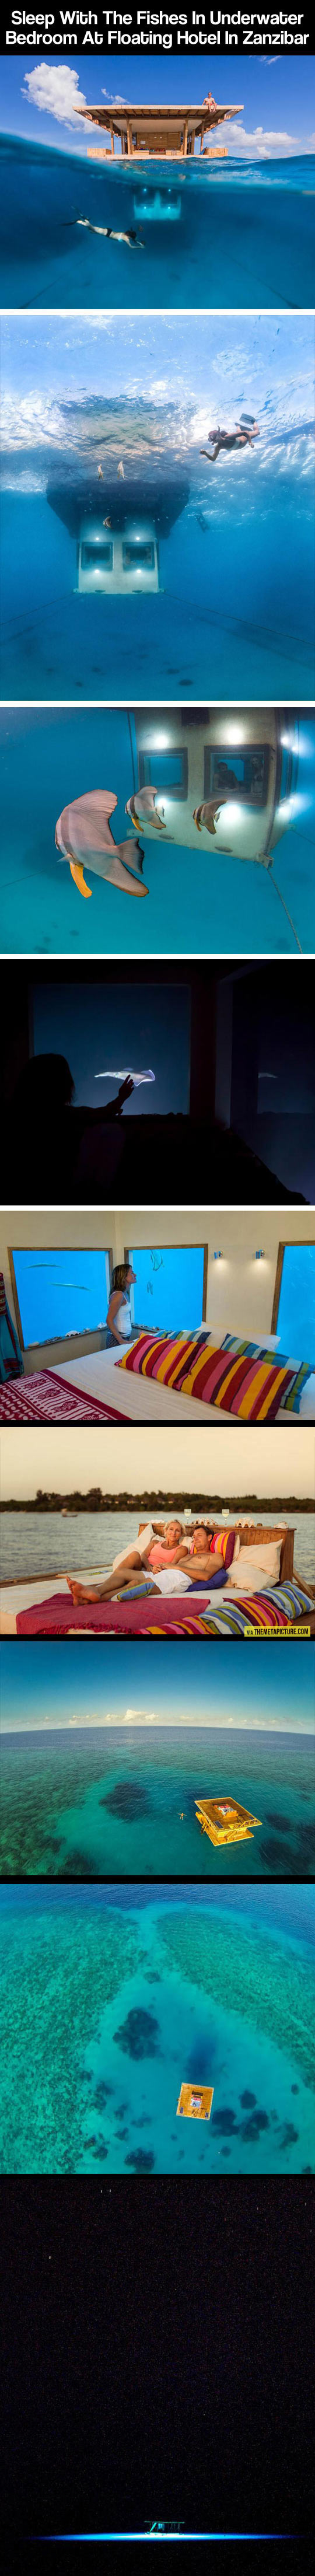 funny-underwater-bedroom-floating-hotel